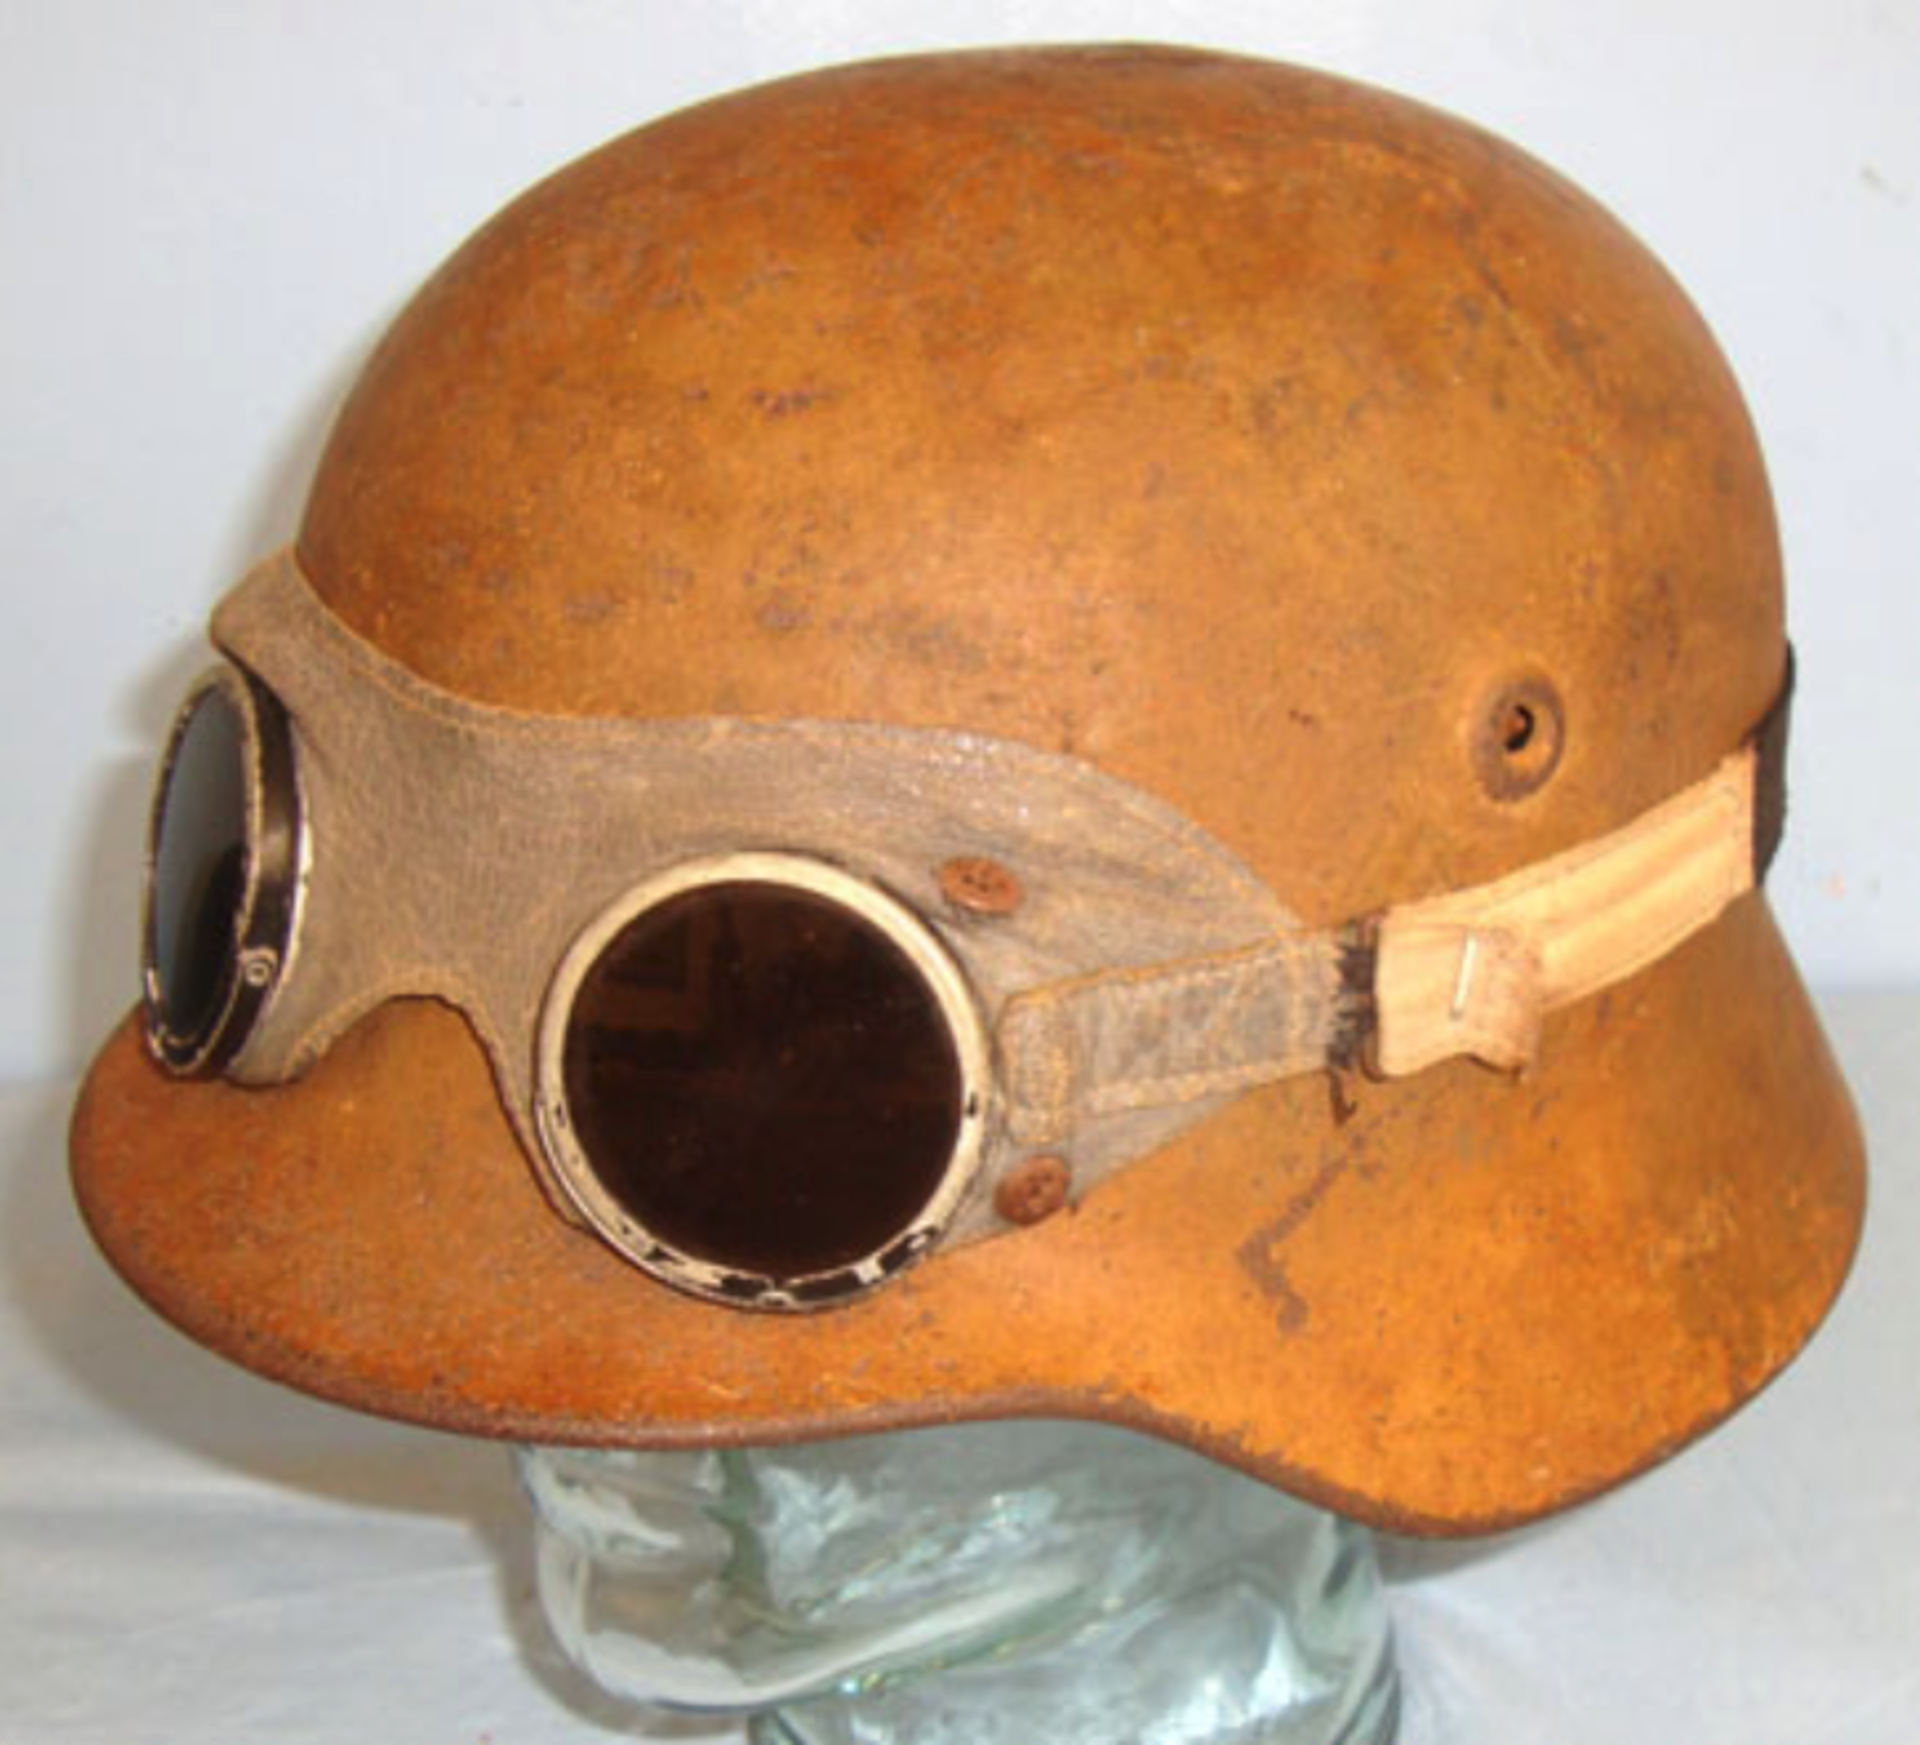 ORIGINAL, WW2 Nazi German Luftwaffe M40 Combat Helmet By ïQ' (Quist) With Tropical Tan Paint - Image 3 of 3